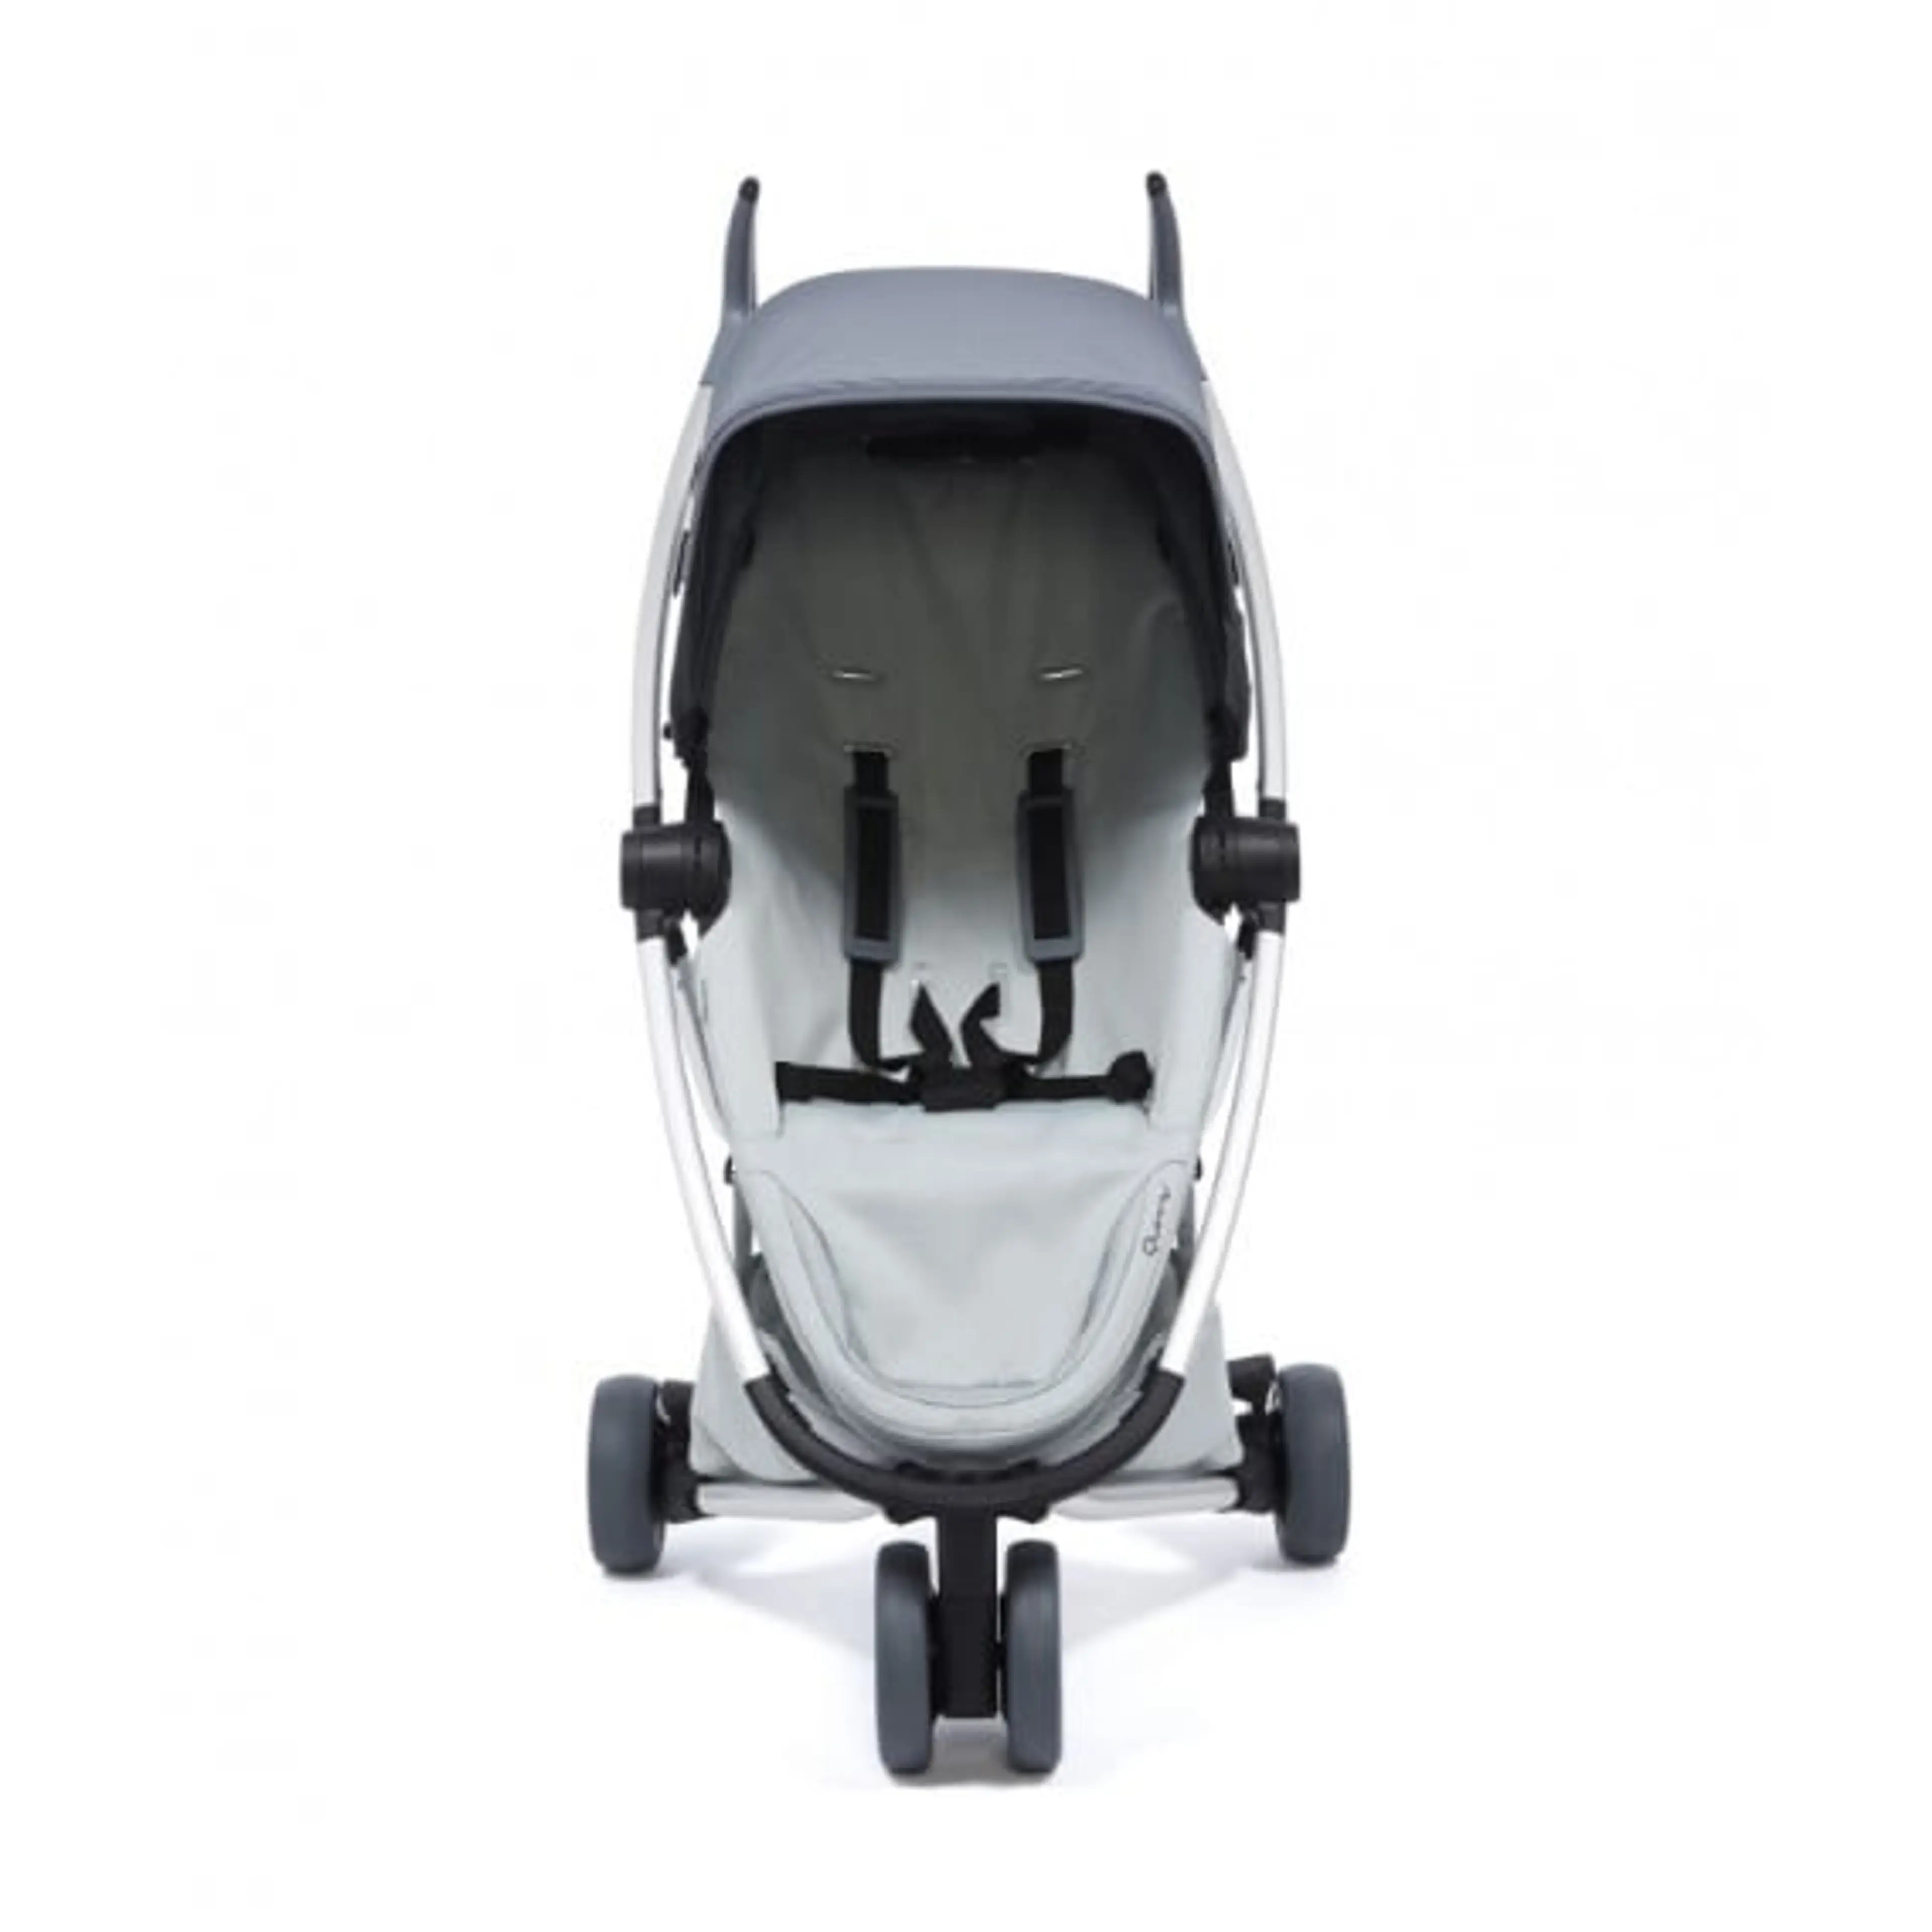 Комбинирана детска количка, Zapp Flex Graphite on Grey